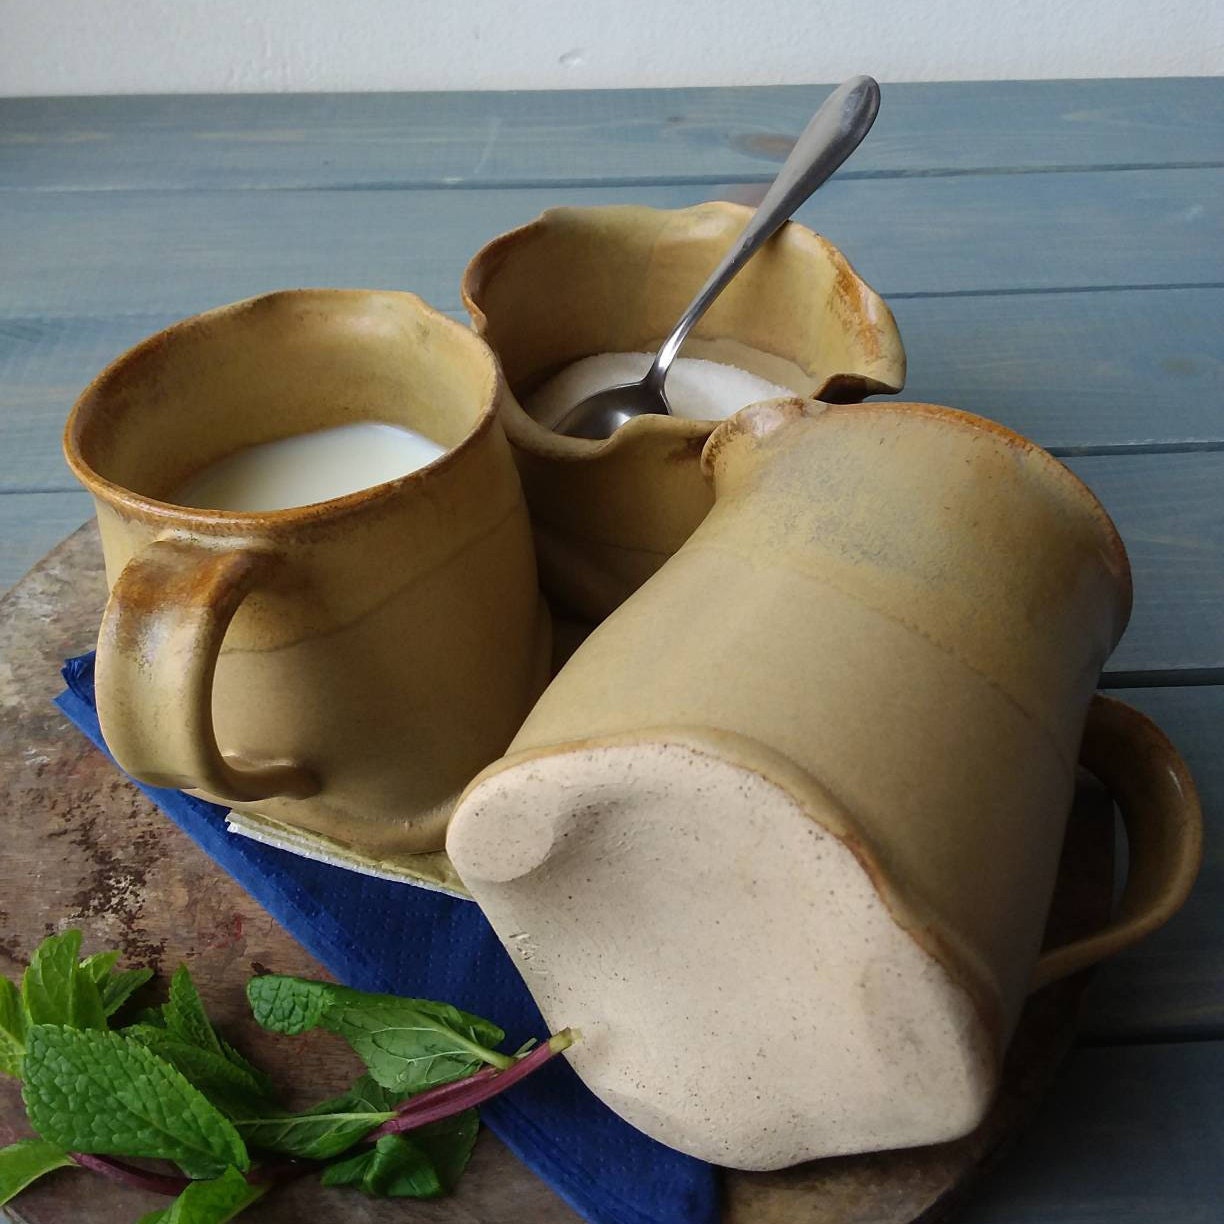 Nucookery Ceramic Sugar and Creamer Set, Sugar Bowl